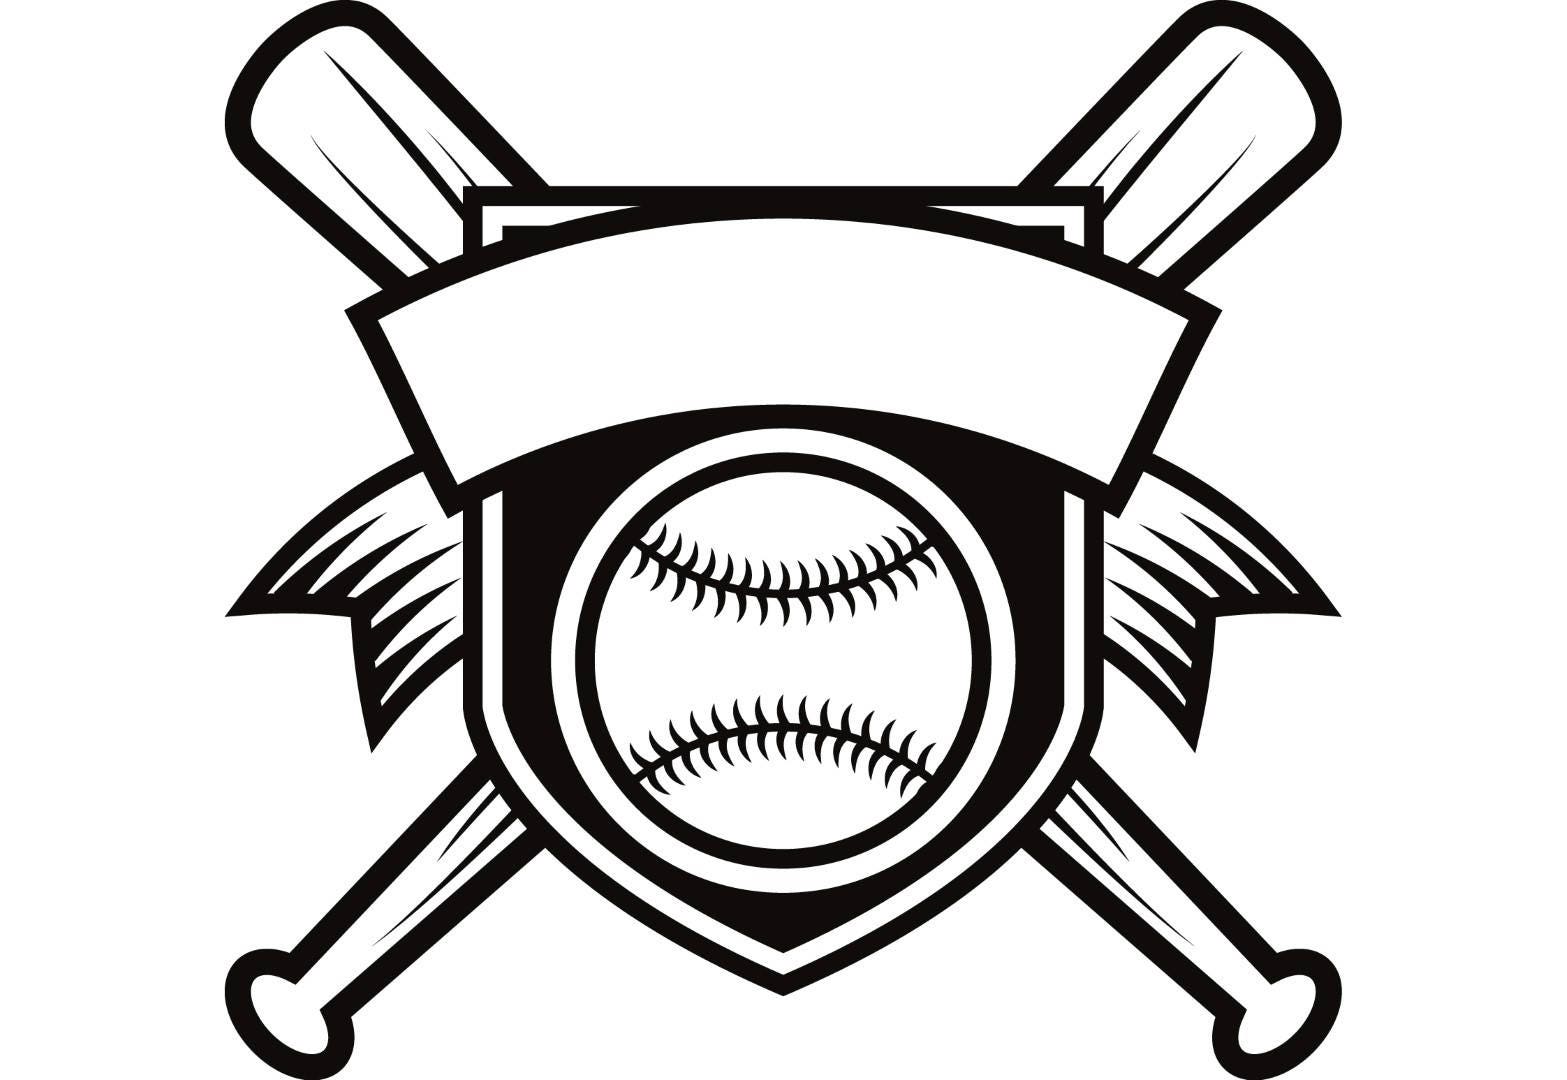  Baseball Logo 1 Banner Bats Crossed Ball Diamond Sports Etsy